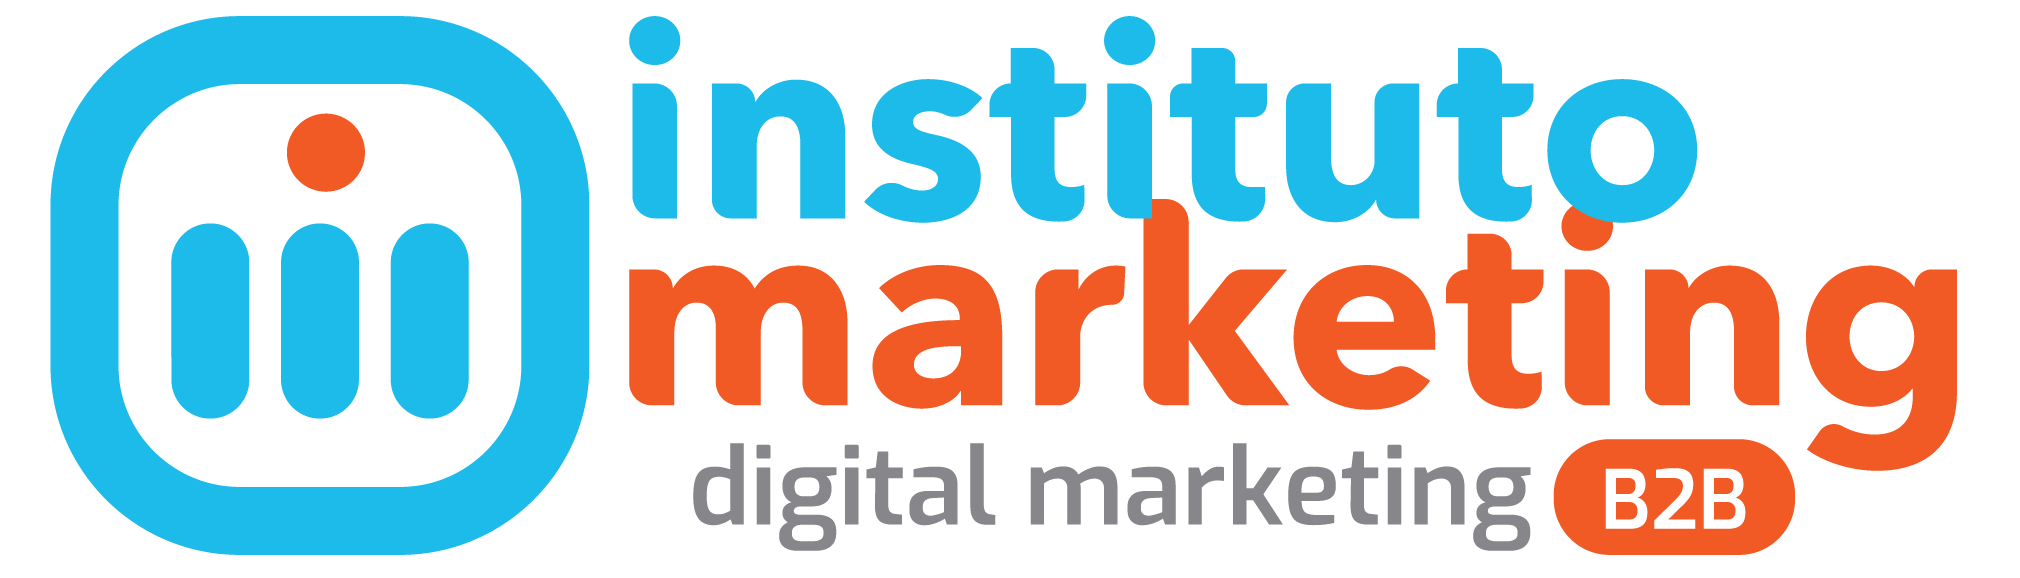 Marketing Digital para Software Houses | Instituto Marketing